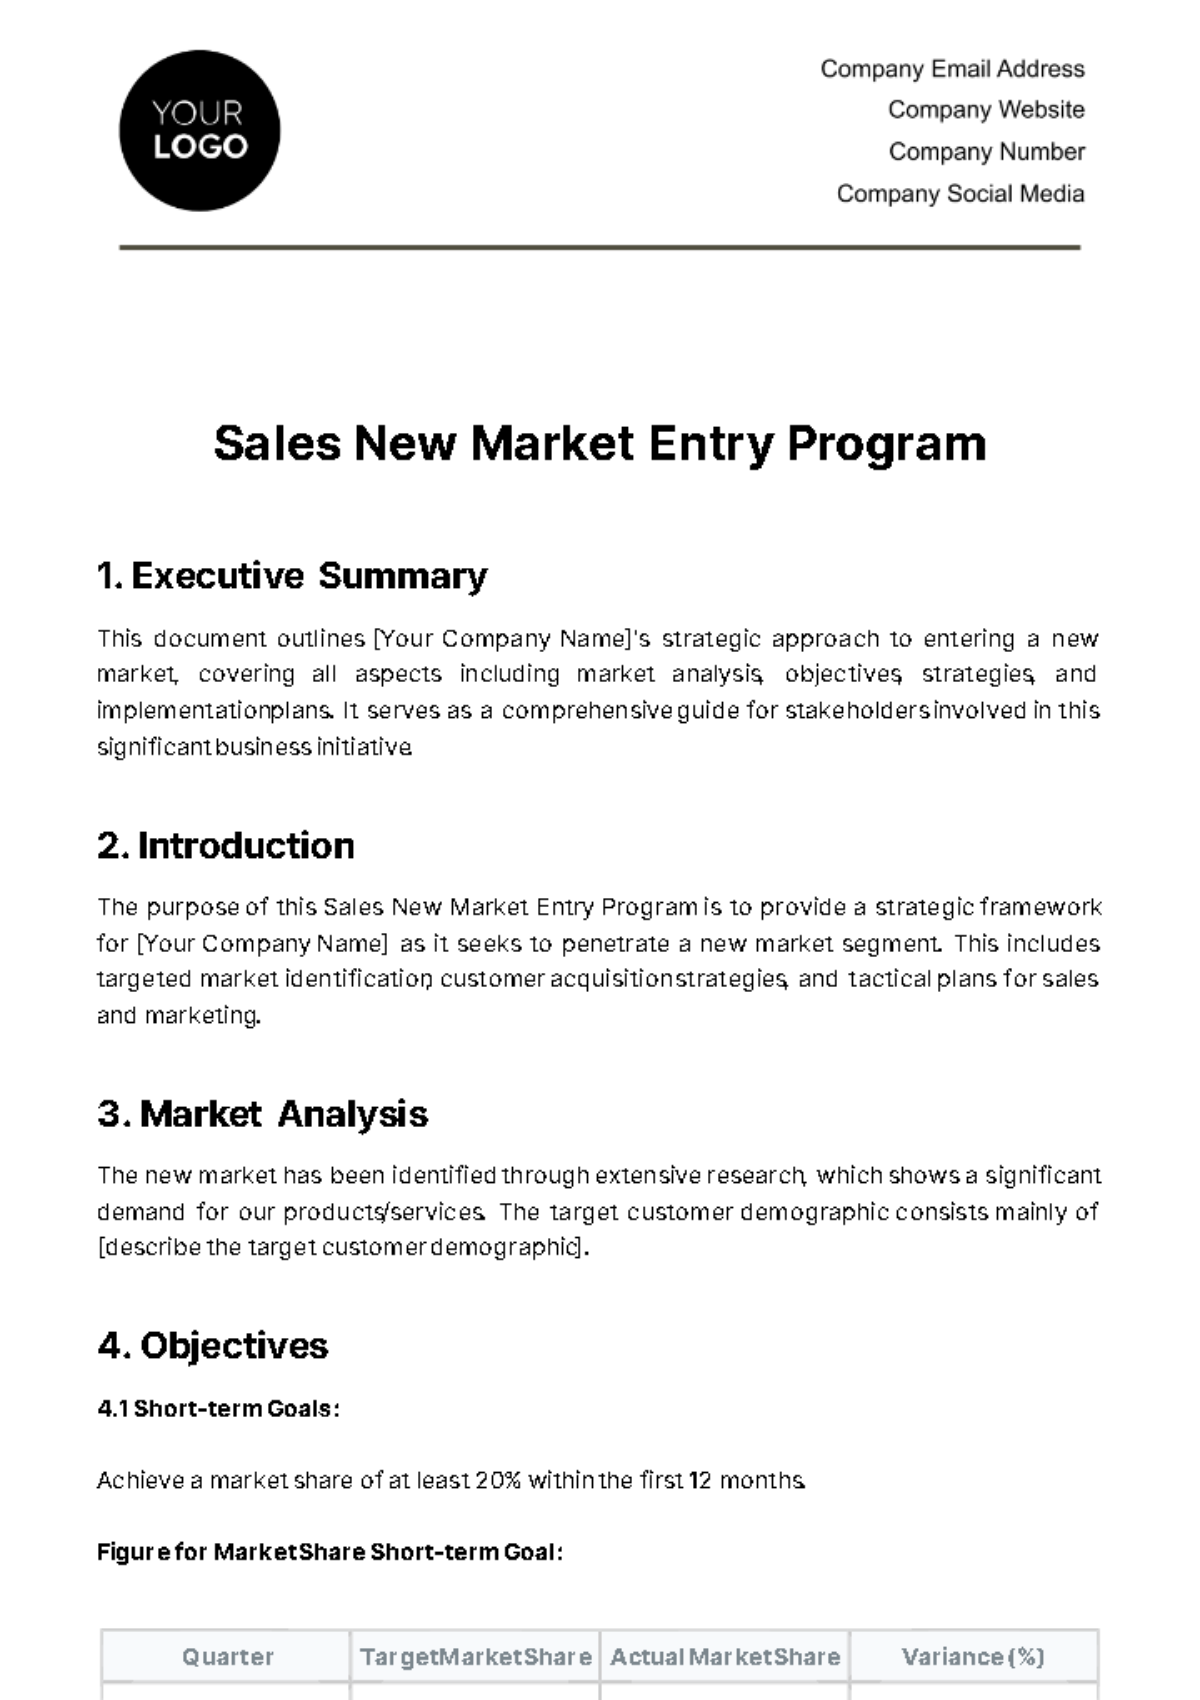 Sales New Market Entry Program Template